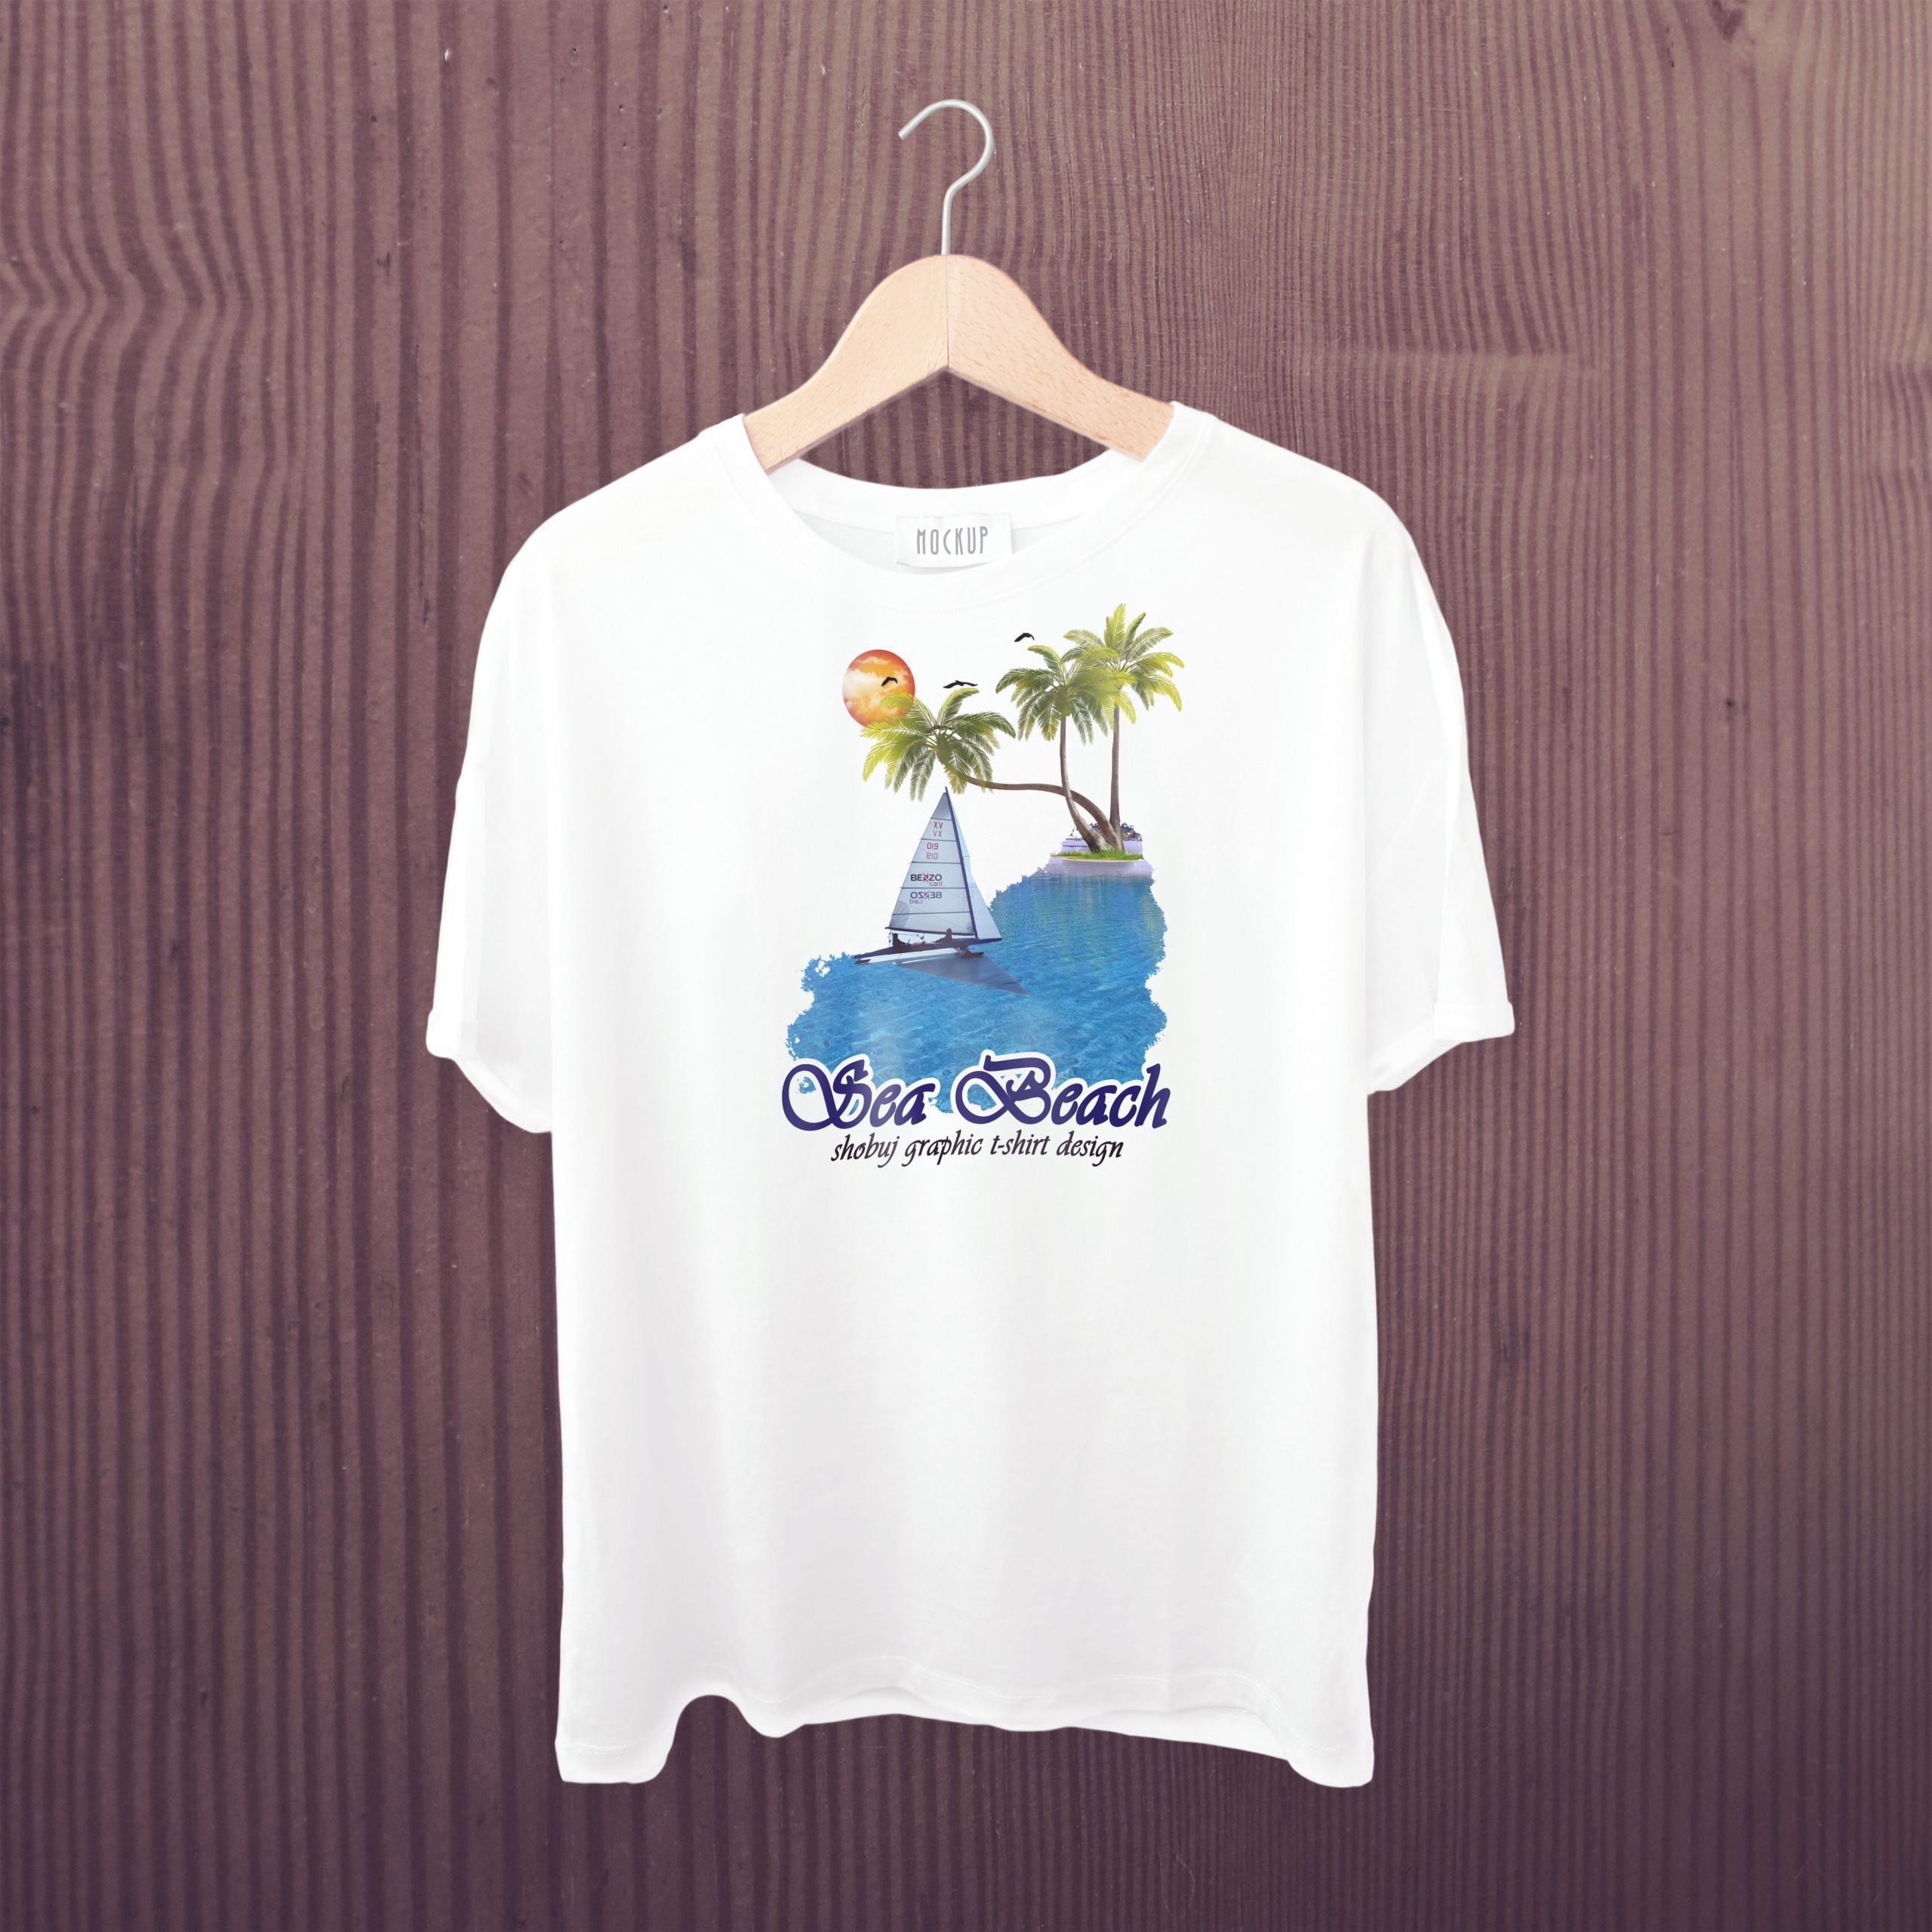 Sea beach T shirt mockup presentation